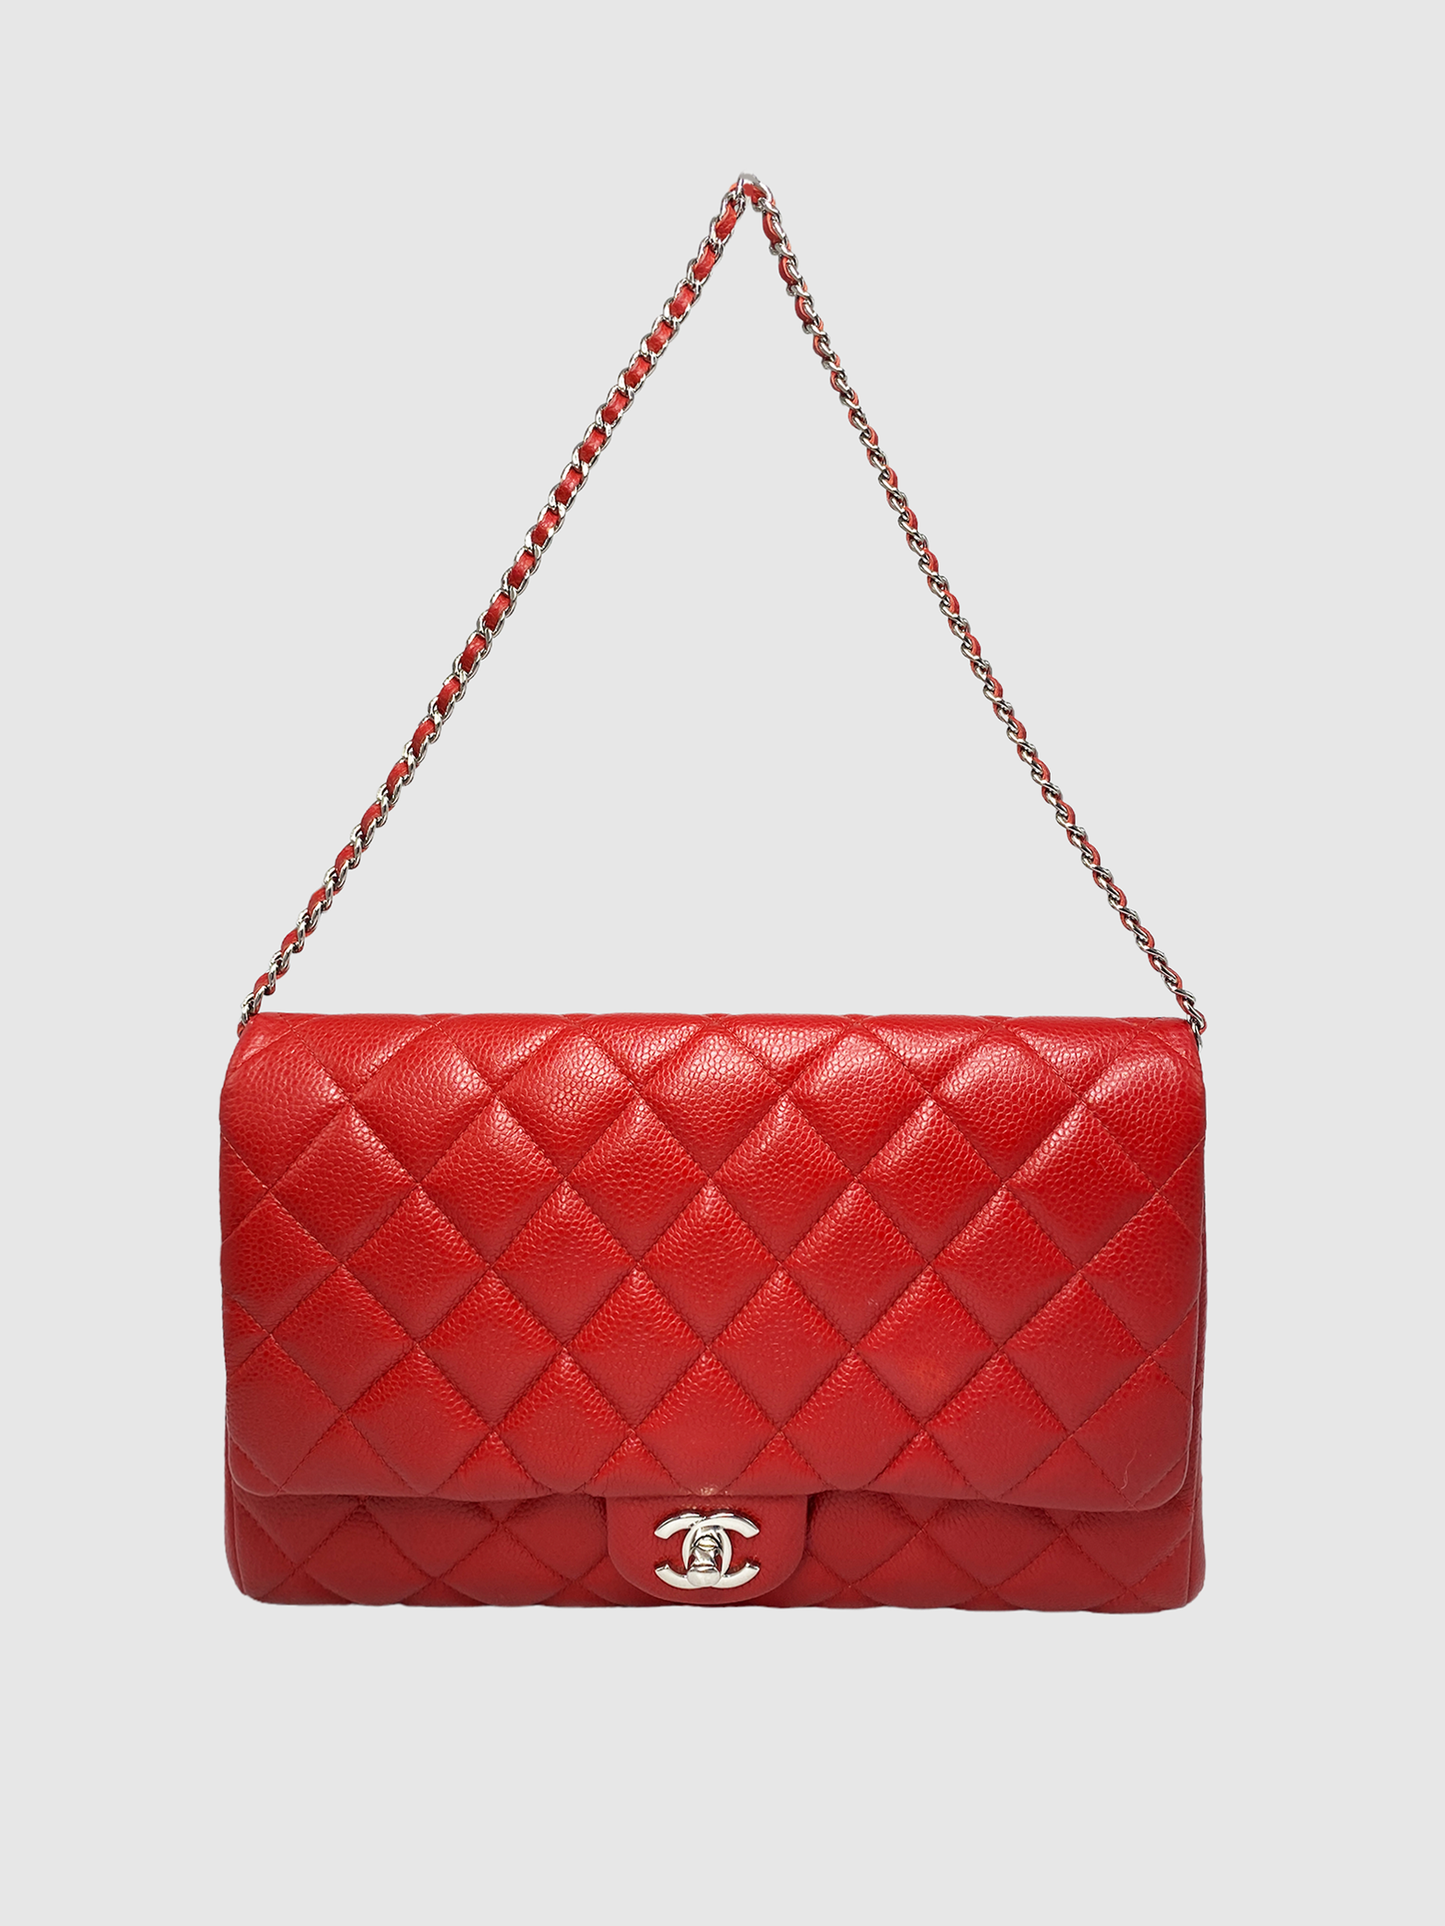 Chanel Red Caviar Maxi Flap Bag